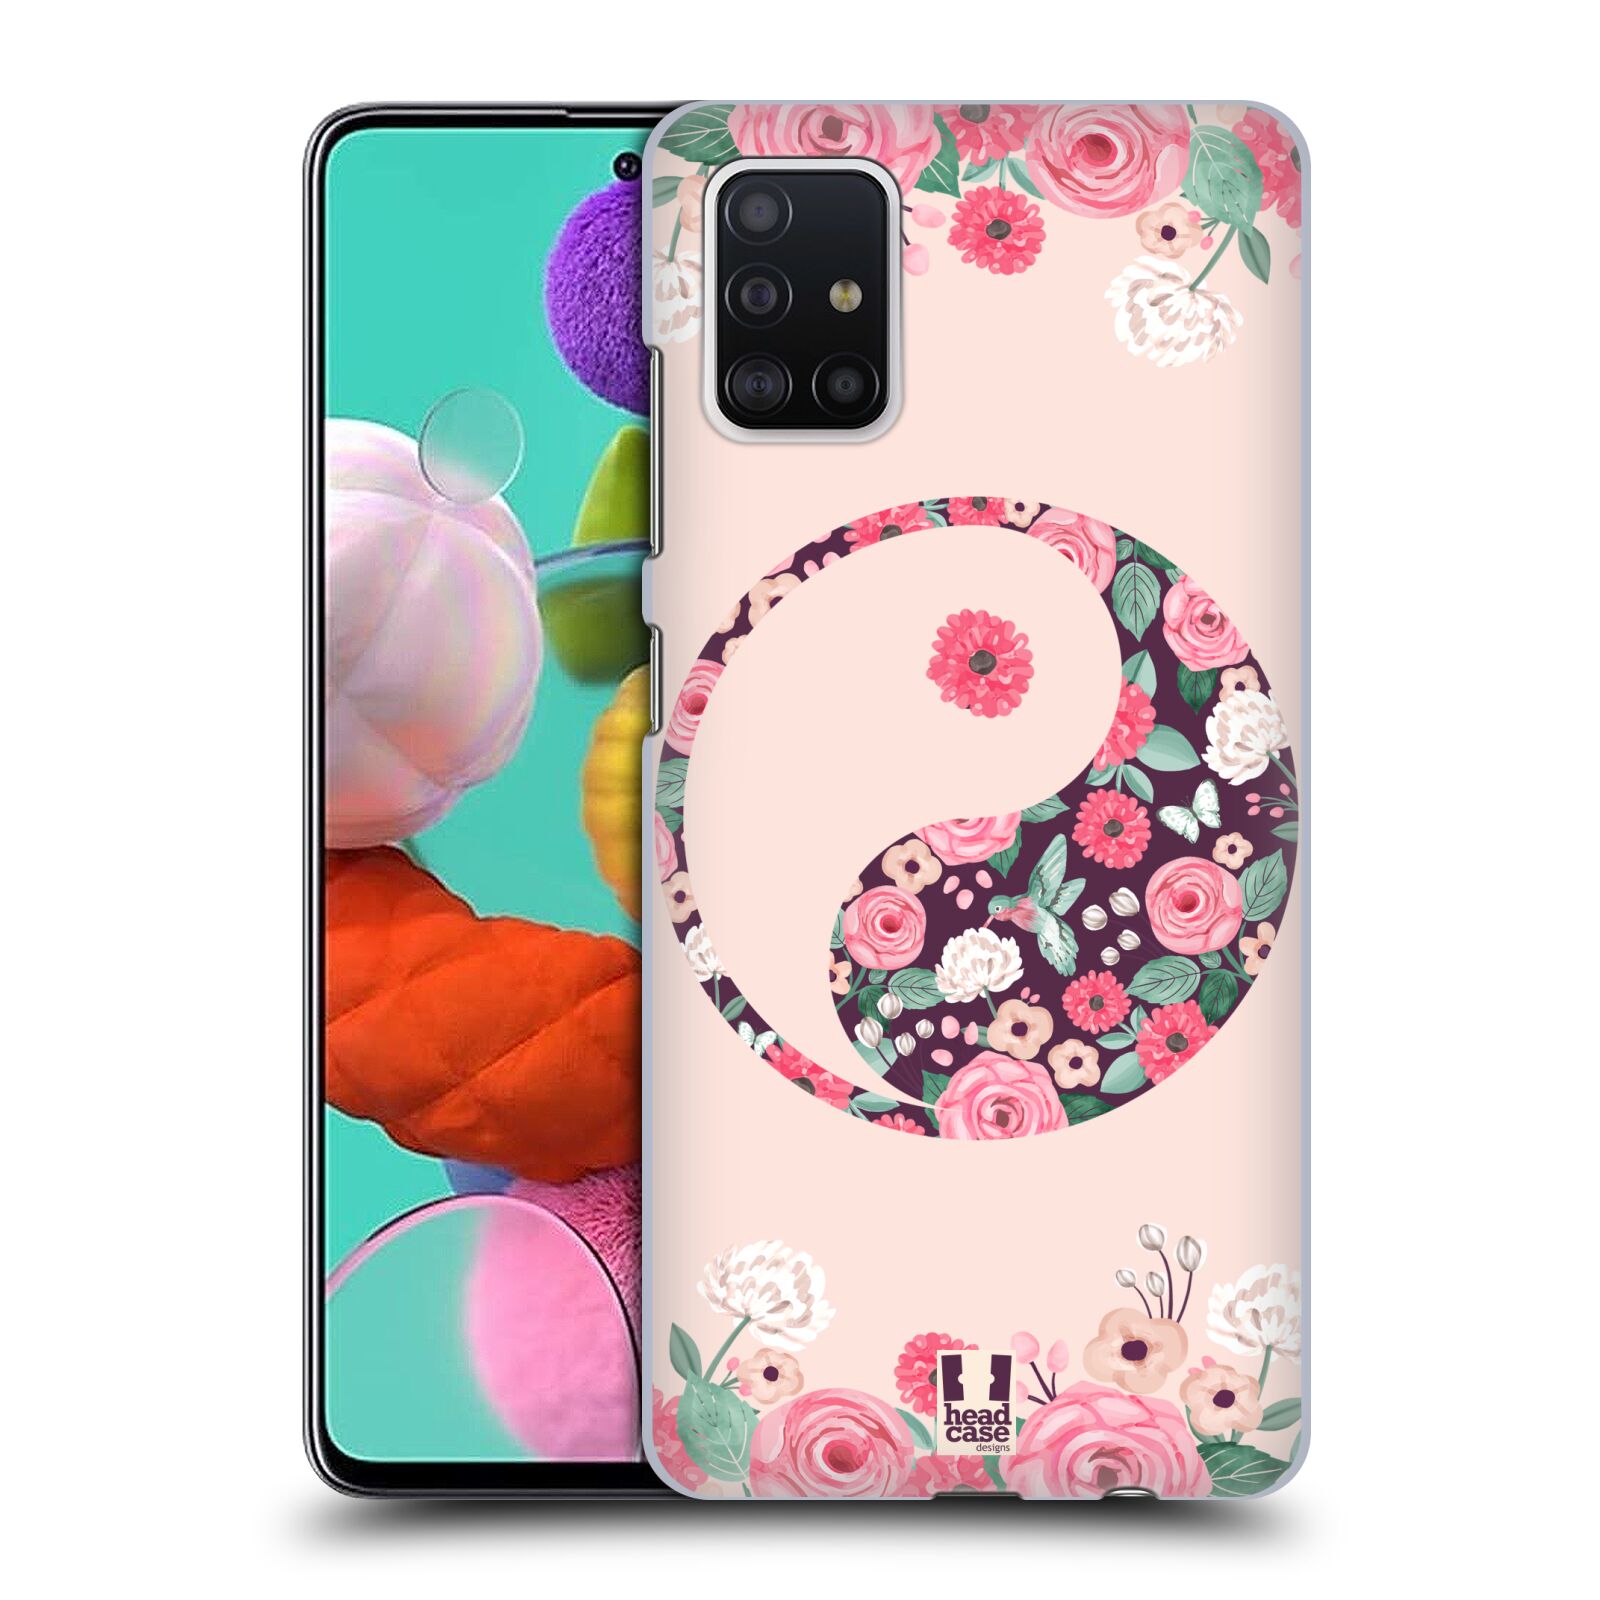 Plastové pouzdro na mobil Samsung Galaxy A51 - Head Case - Yin a Yang Floral (Plastový kryt, pouzdro, obal na mobilní telefon Samsung Galaxy A51 A515F Dual SIM s motivem Yin a Yang Floral)